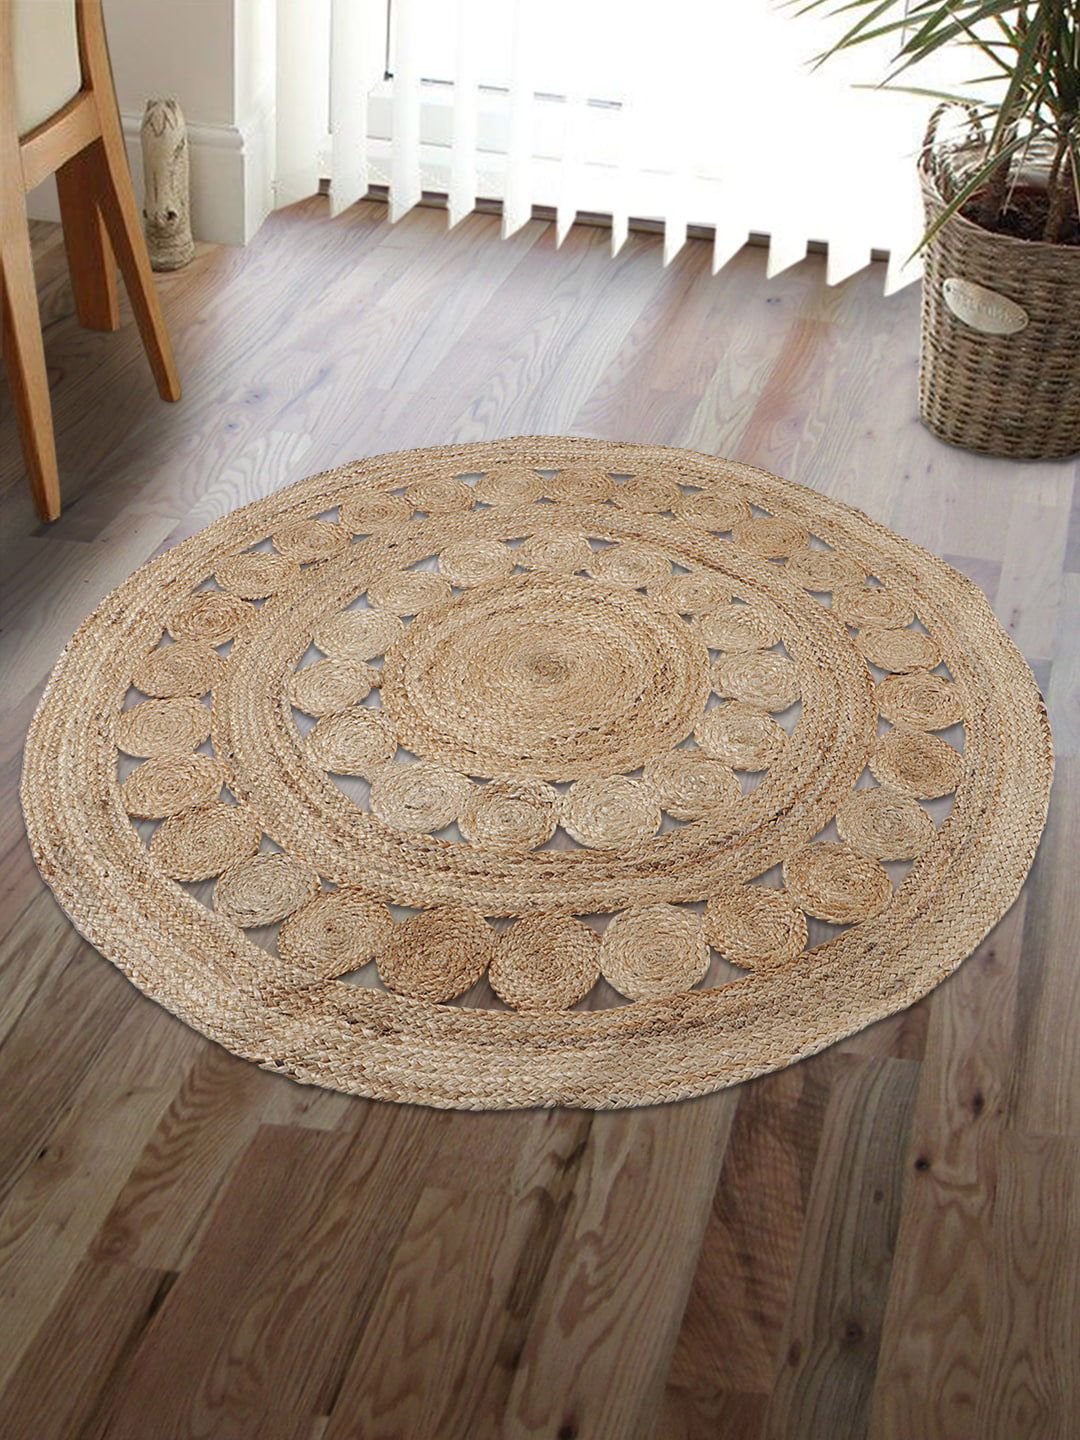 HomeStorie Beige Natural Jute Sustainable Round Floor Carpet Price in India